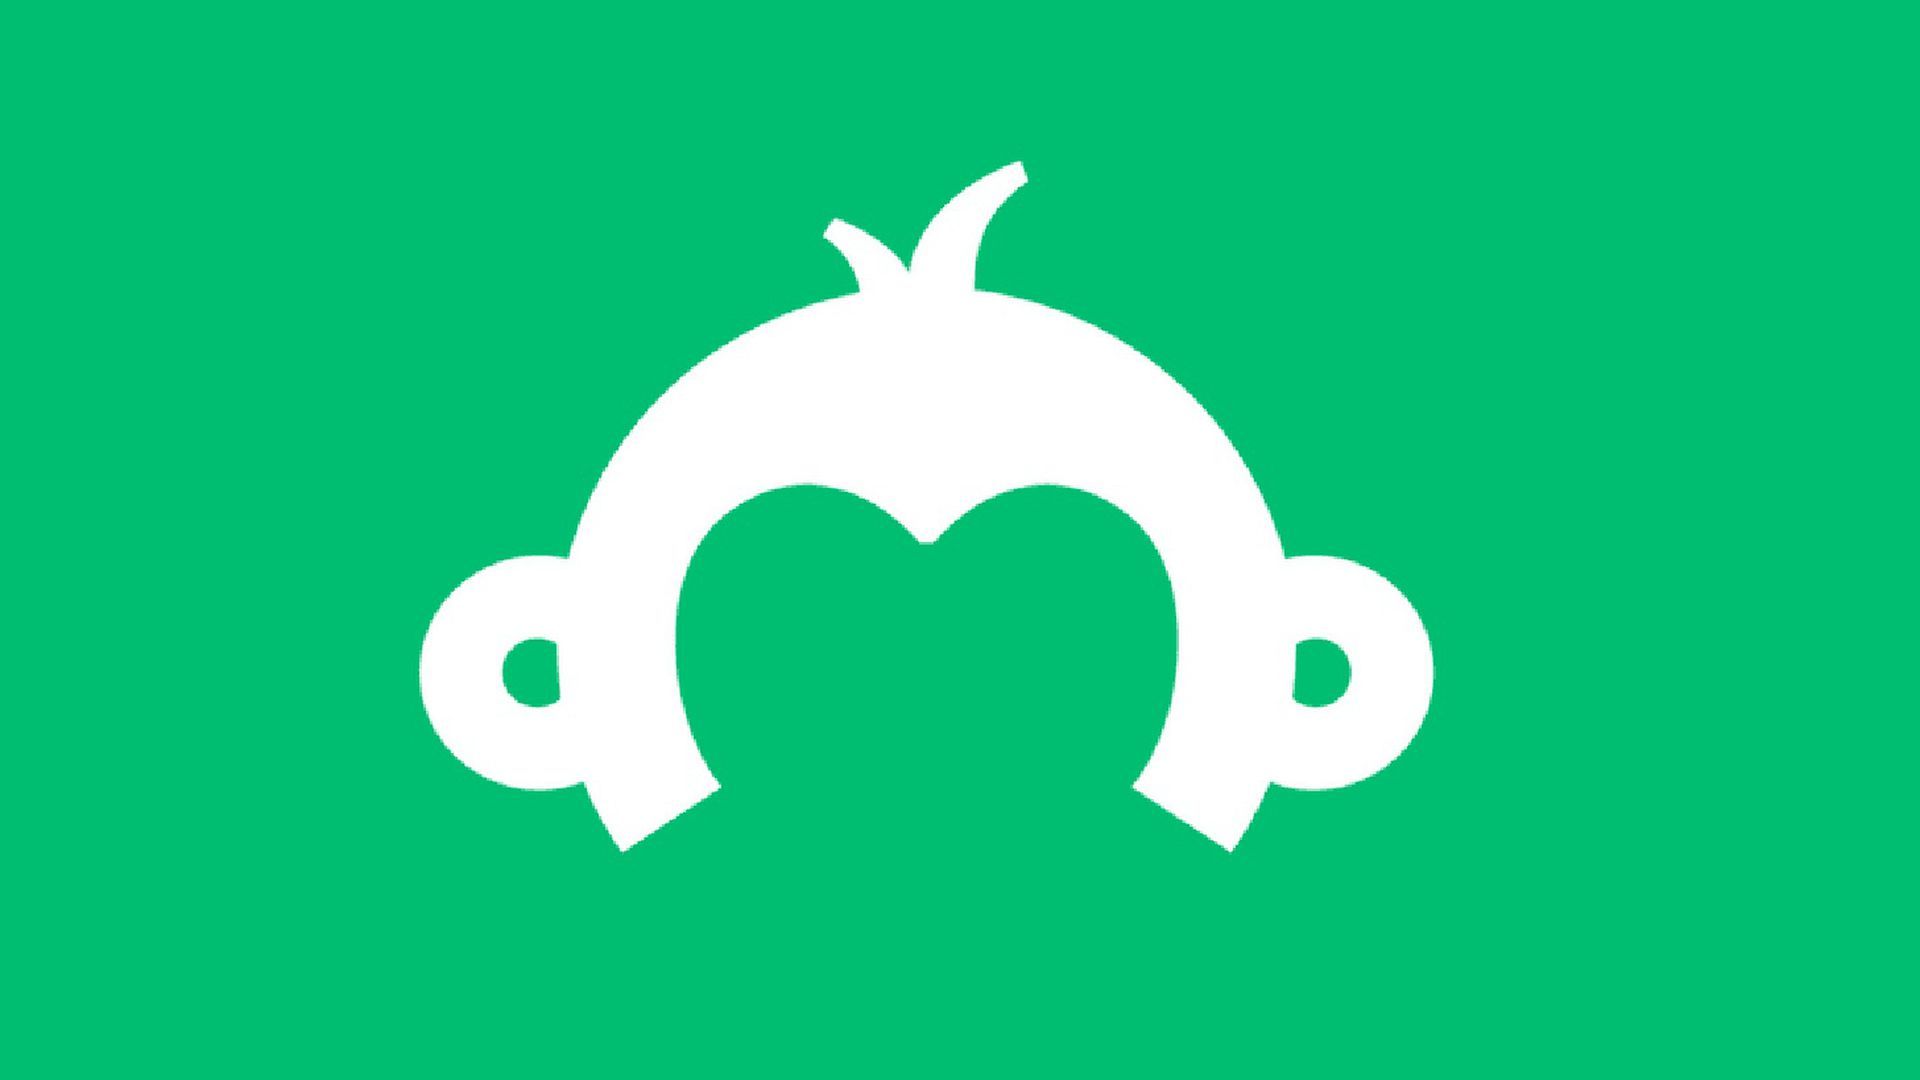 The SurveyMonkey logo.